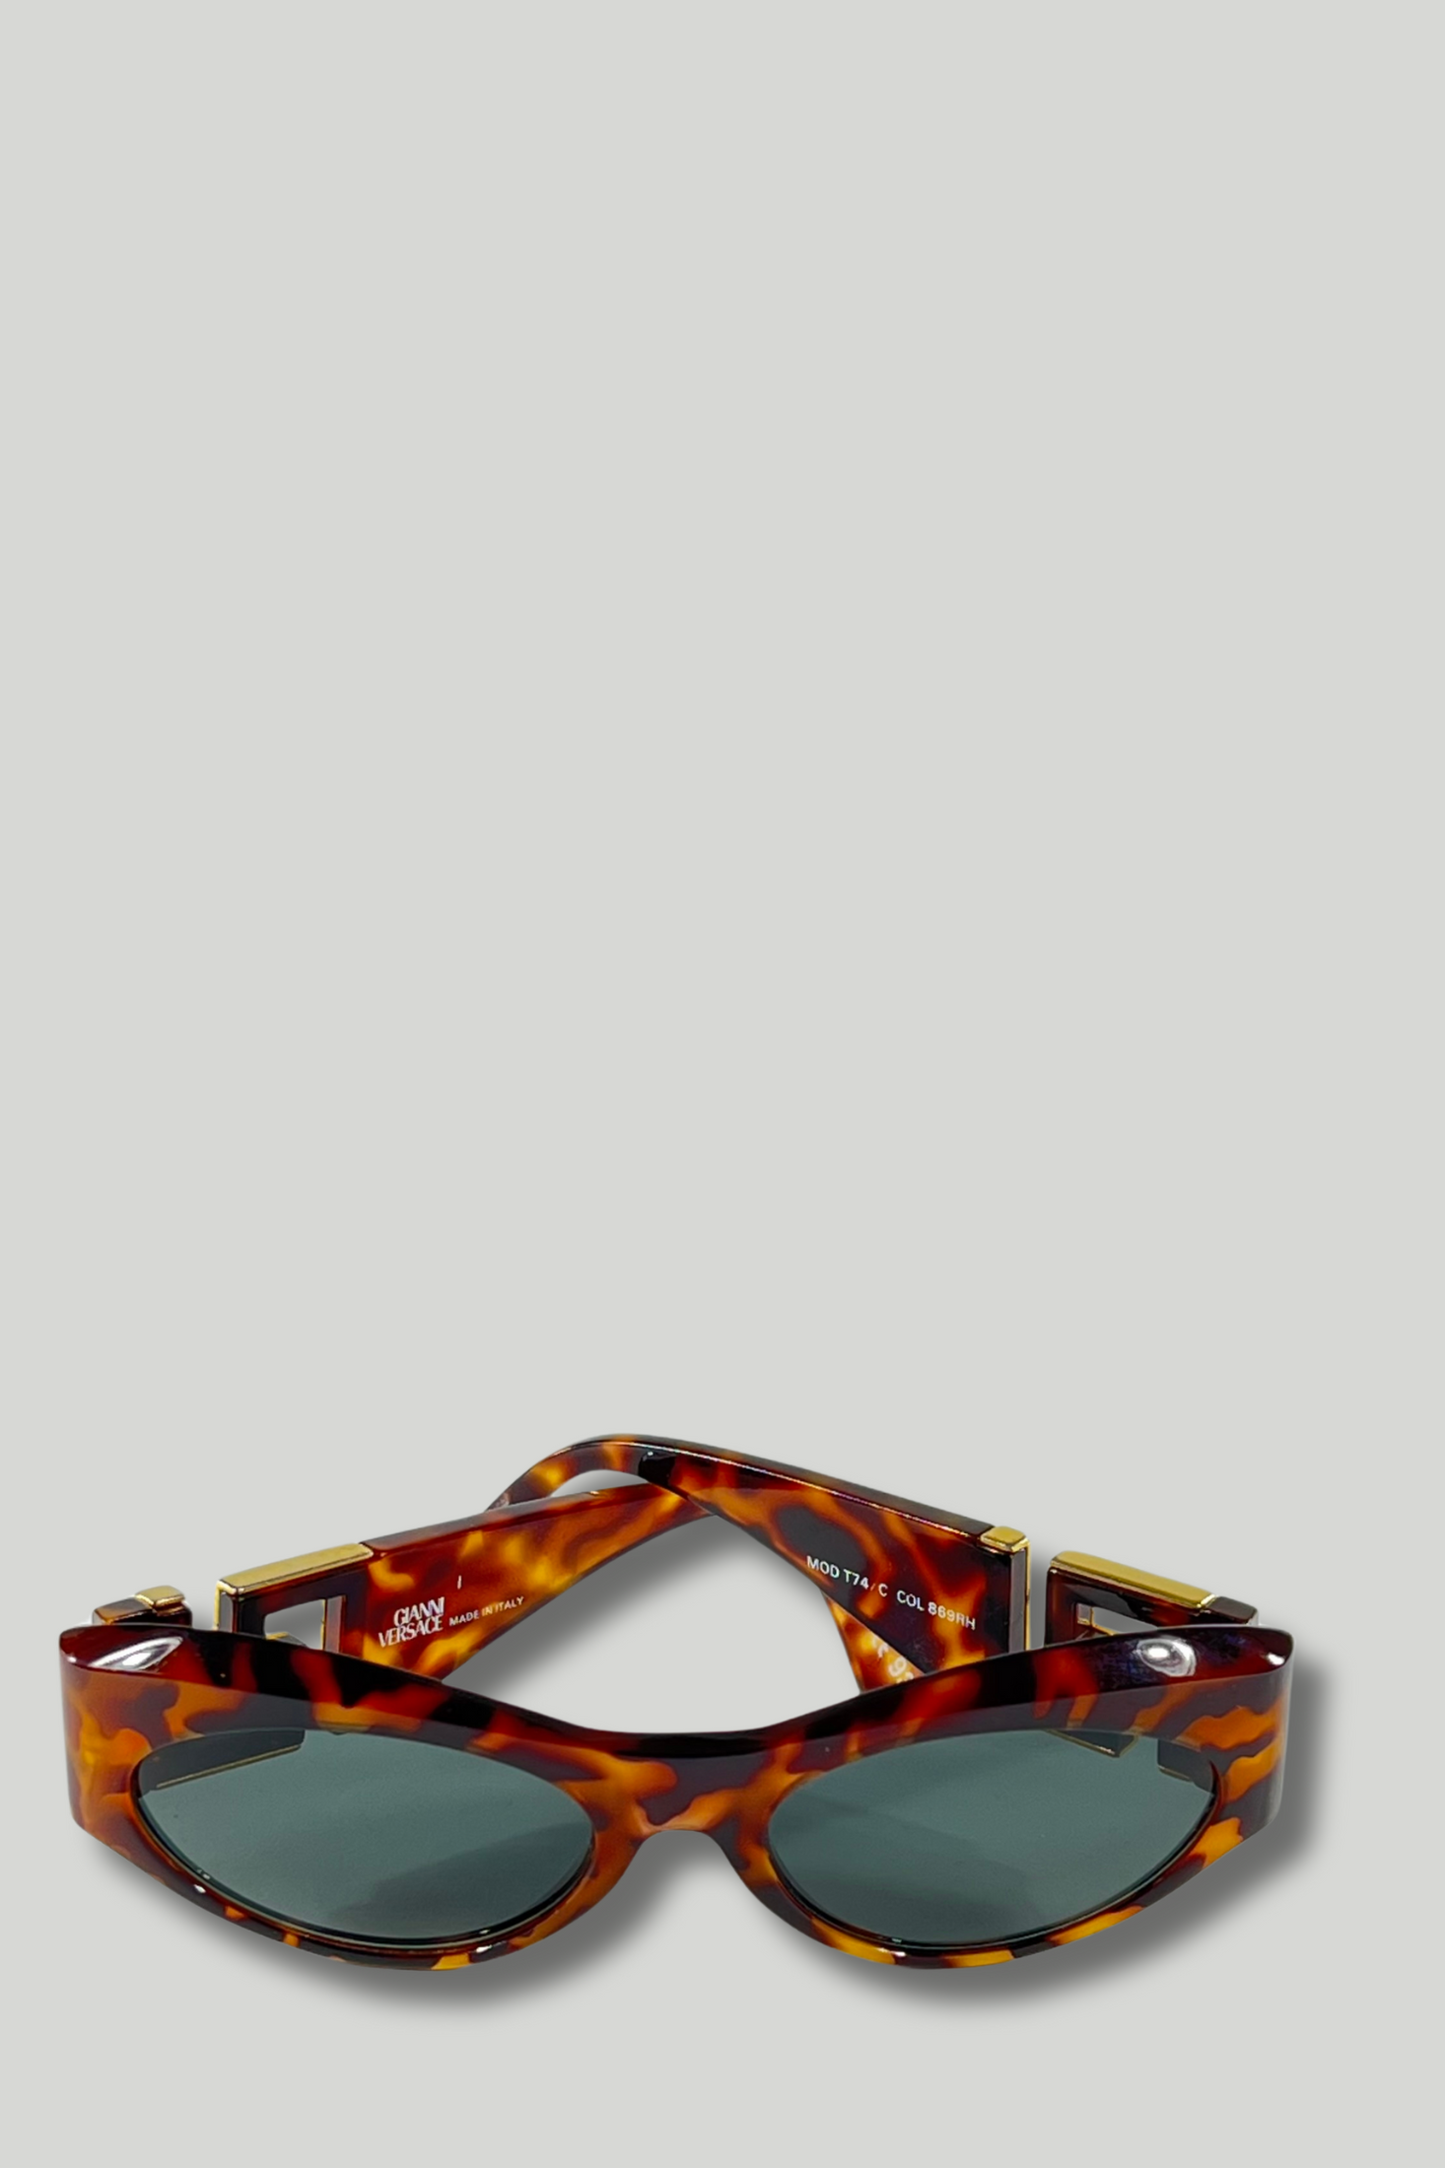 Gianni Versace 1990s Greek Key Tortoise Sunglasses